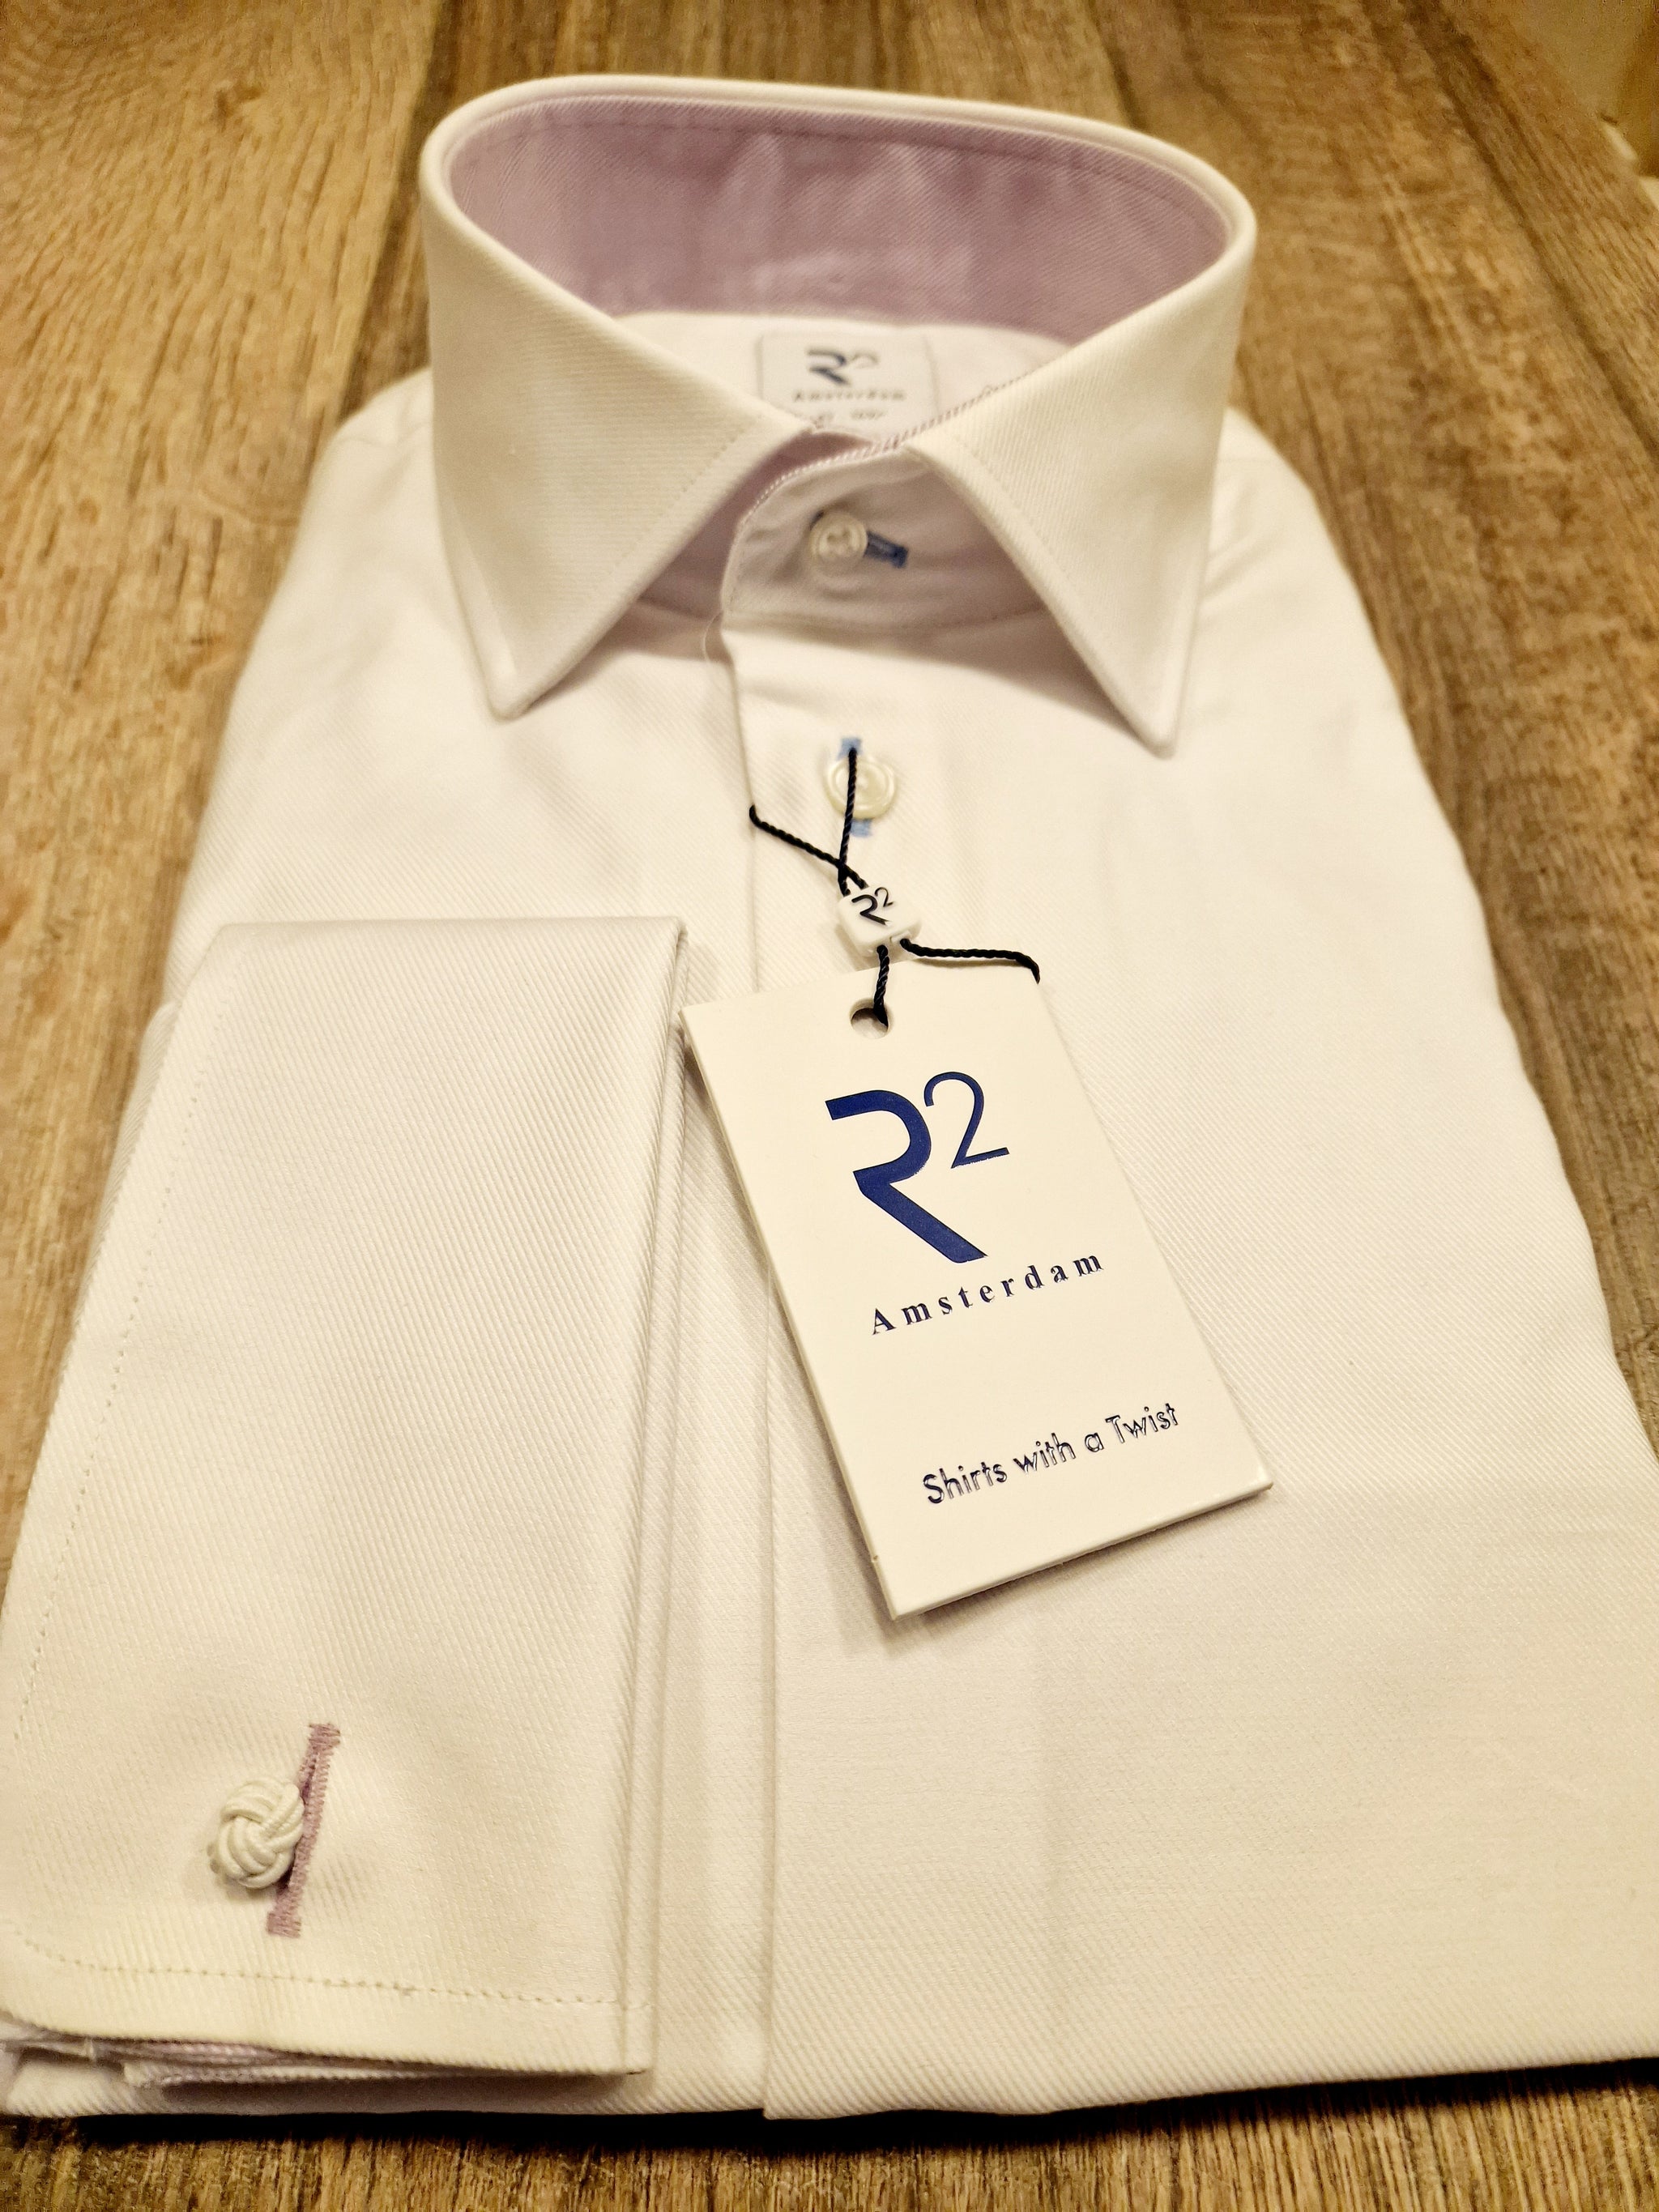 R2 - Amsterdam Double Twist double cuff Shirts